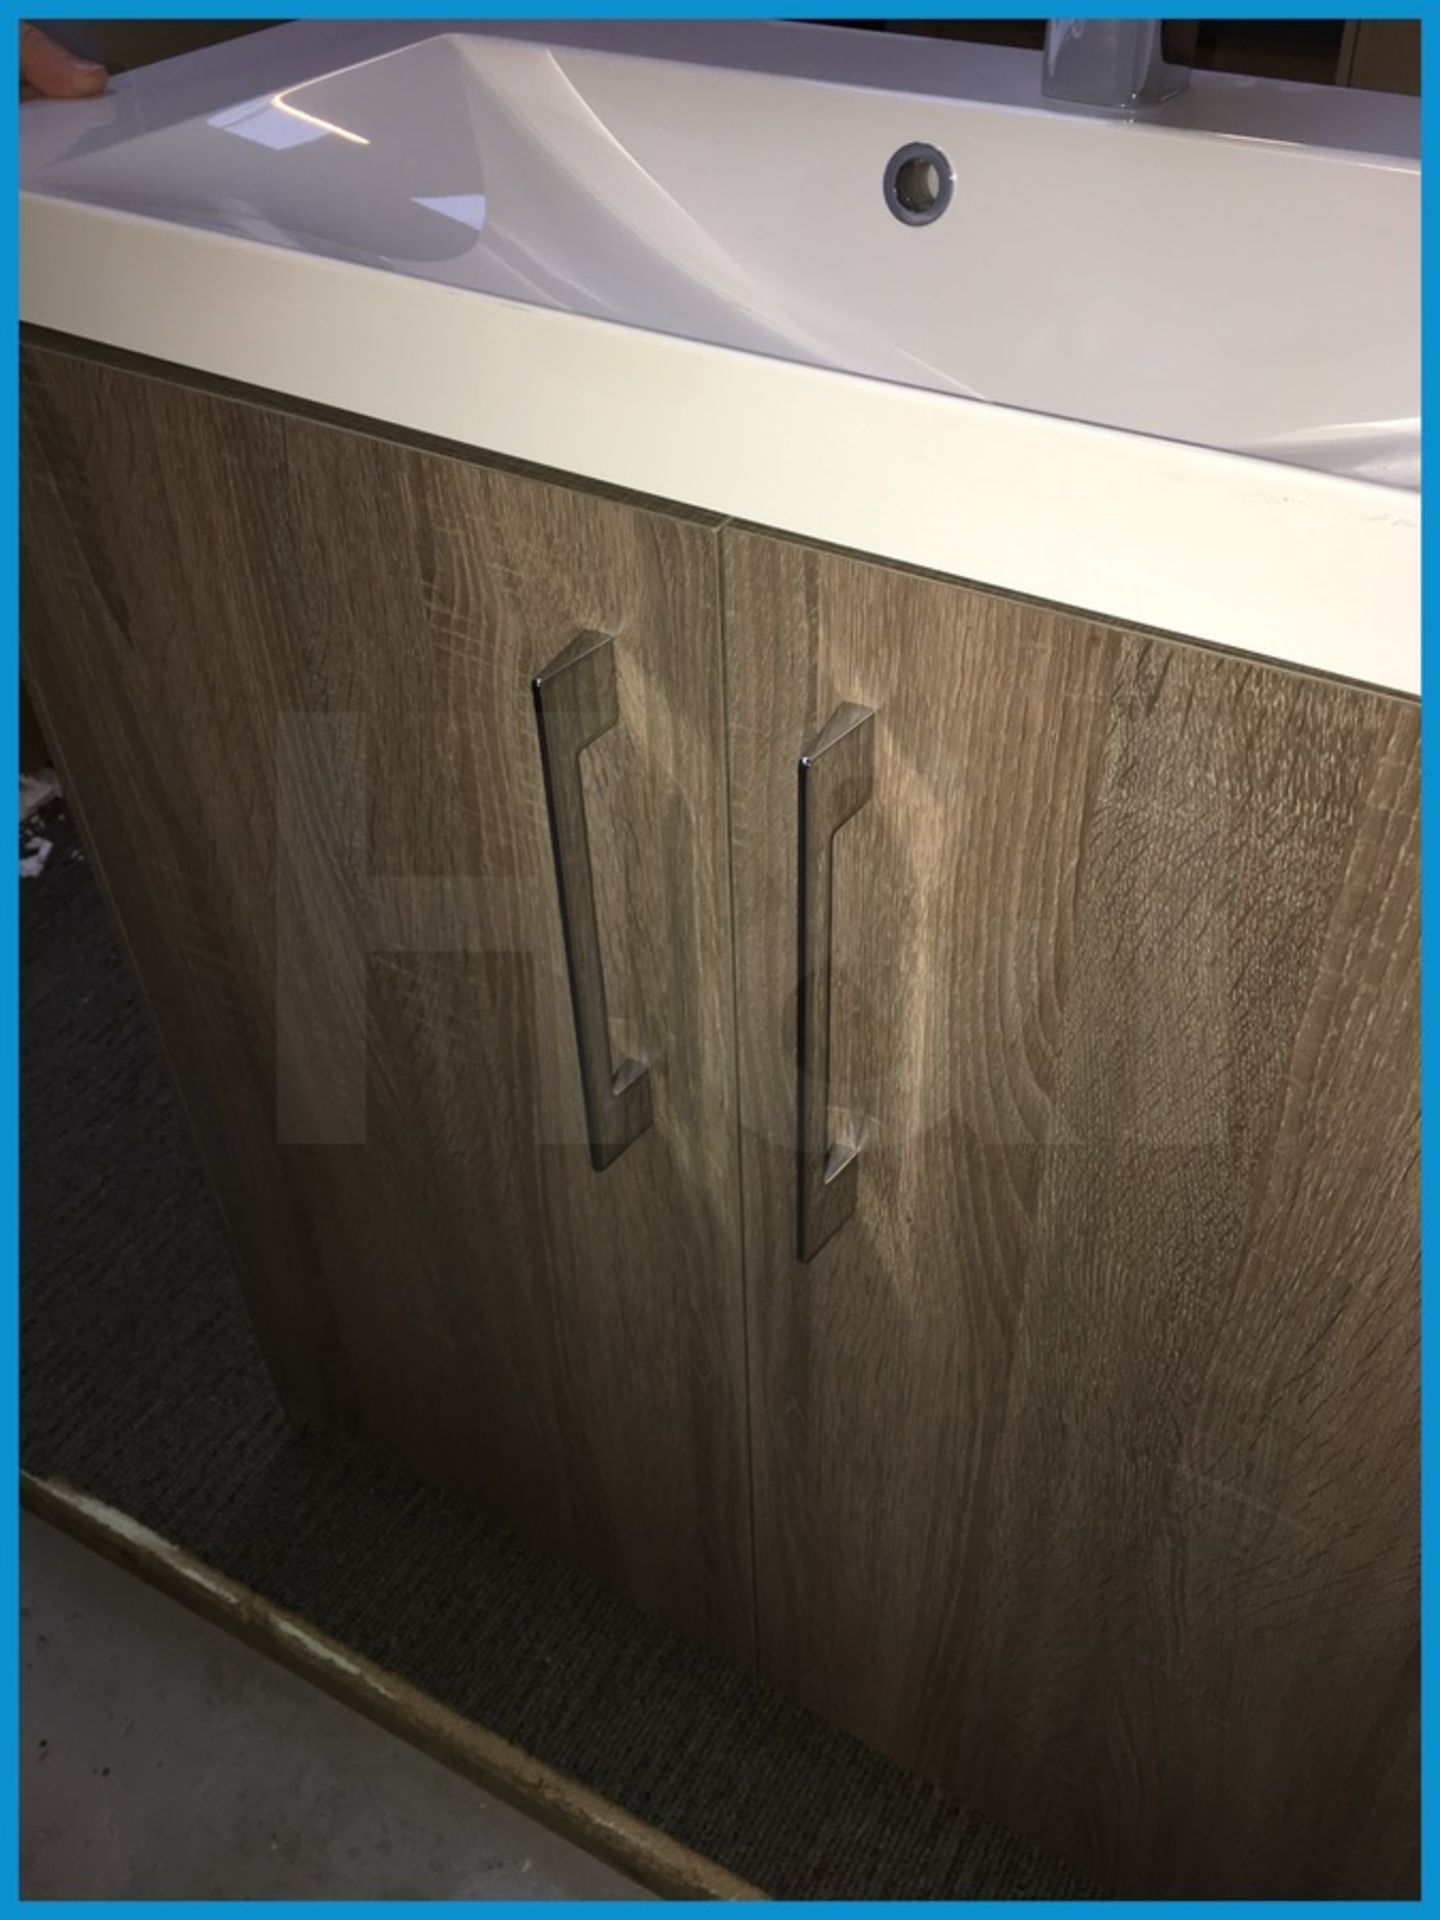 Designer R2 floor standing vanity unit in Havana oak finish with polycarbonate basin and designer - Image 7 of 8